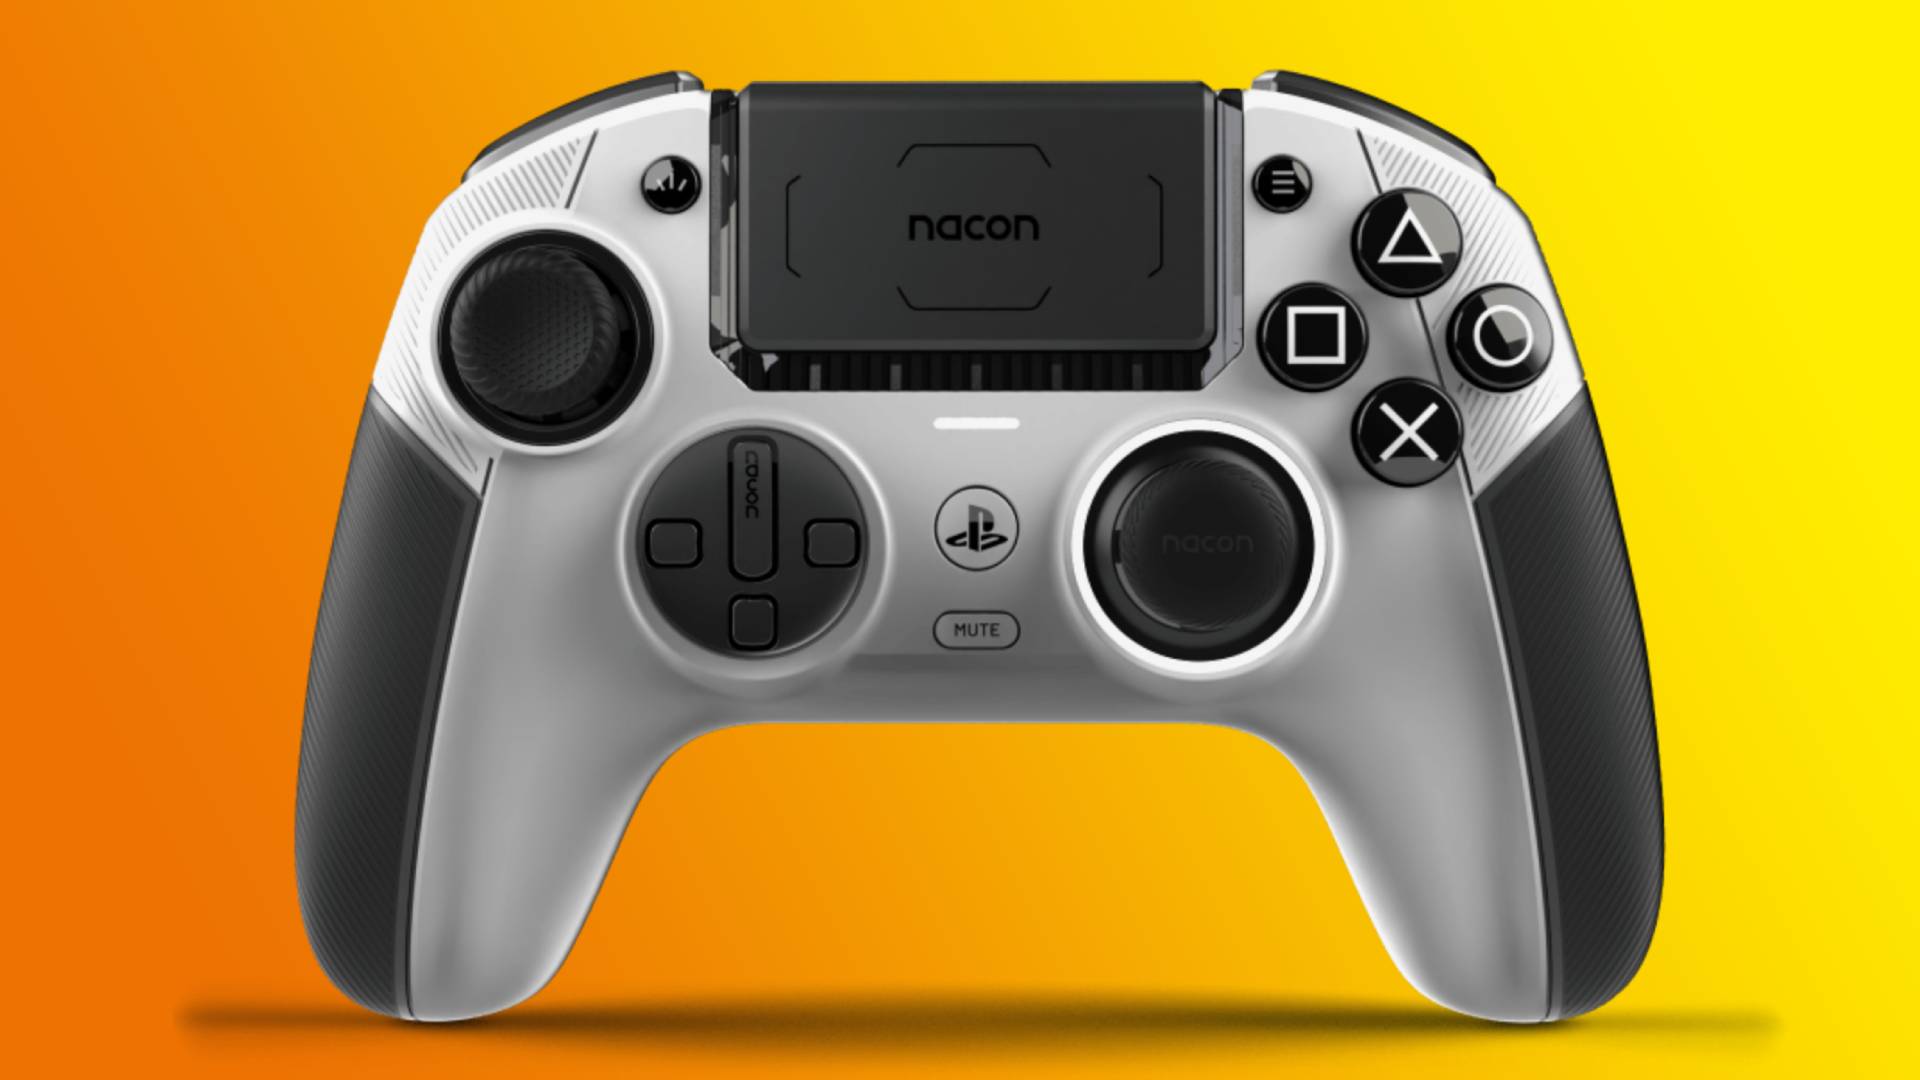 Nacon Revolution 5 Pro Controller for Playstation 5 / Playstation